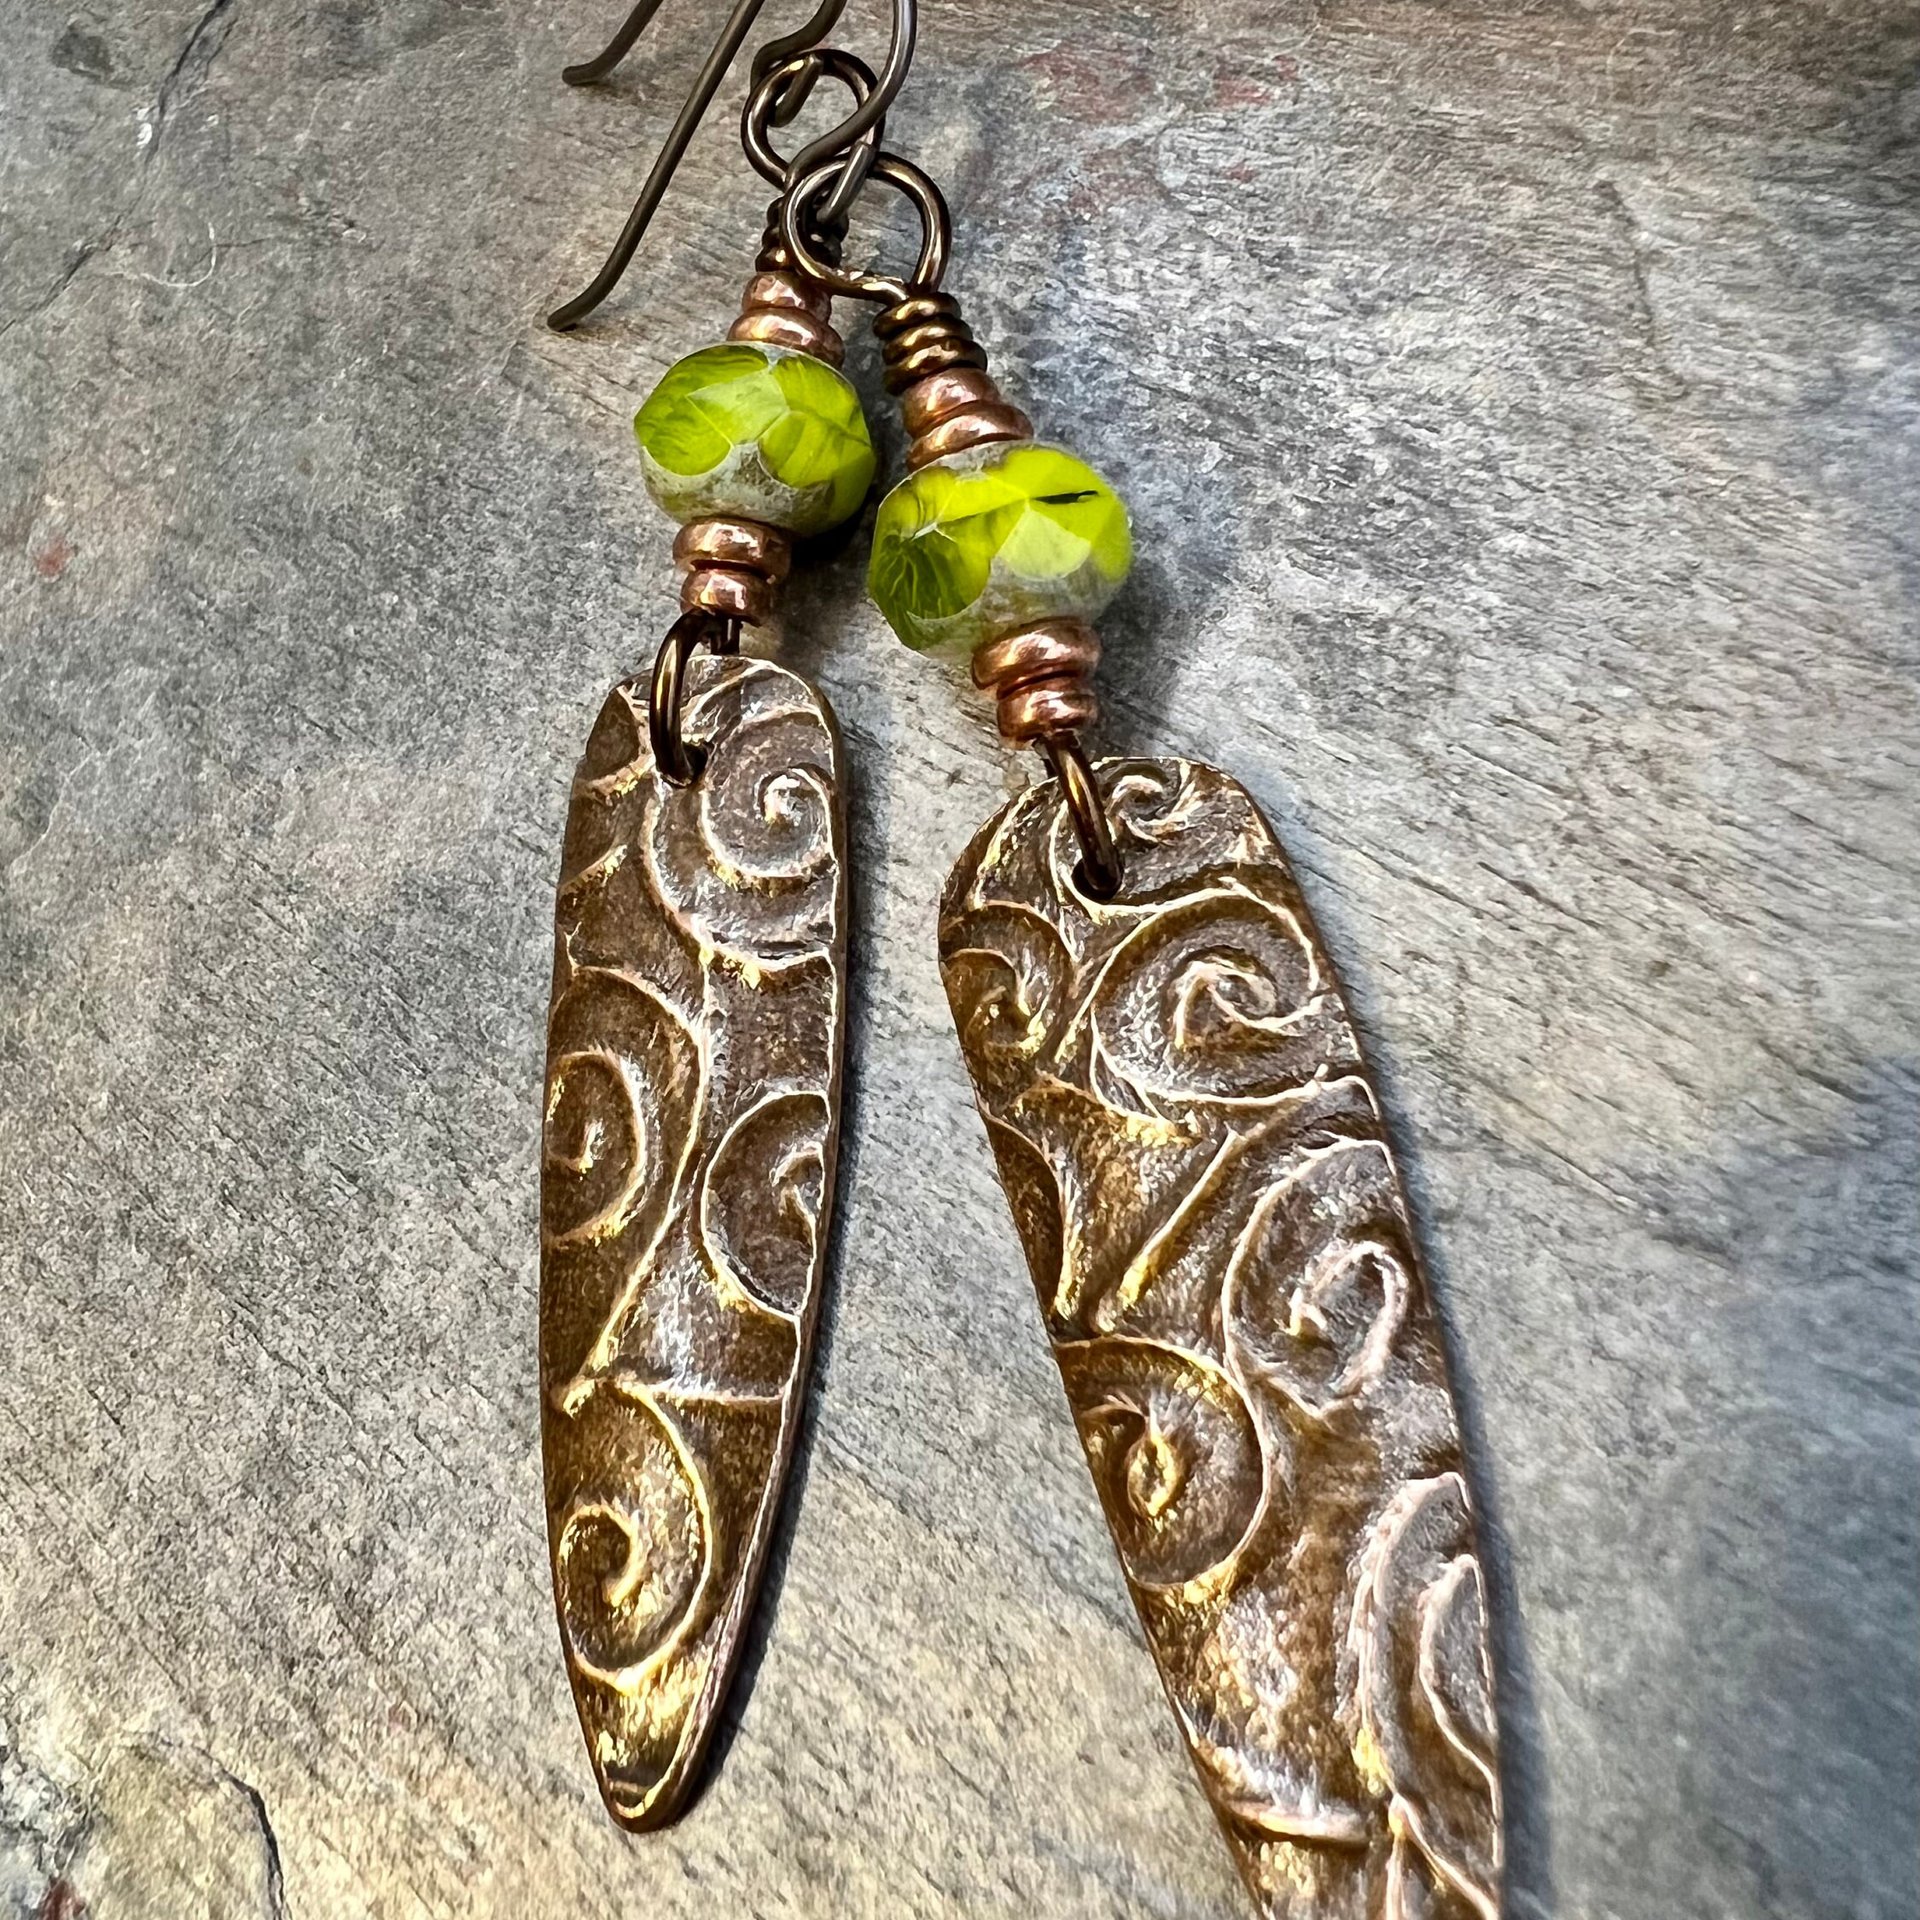 Celtic Spiral Earrings, Copper Shield, Irish Celtic Spirals, Statement Dangle Earrings, Hypoallergenic Ear Wires, Green Czech Glass, Goddess